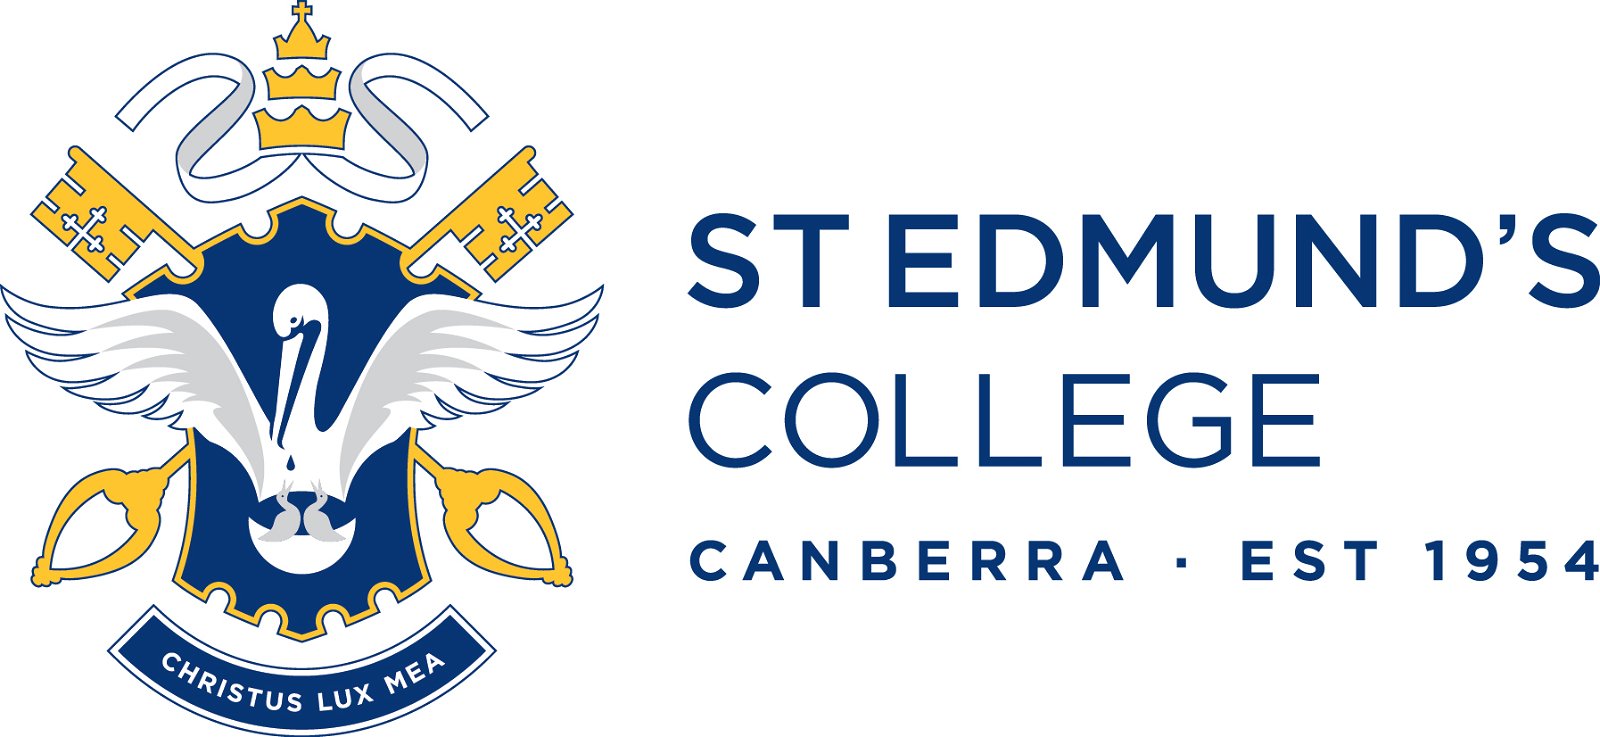 St Edmund's College Canberra - Perth Private Schools